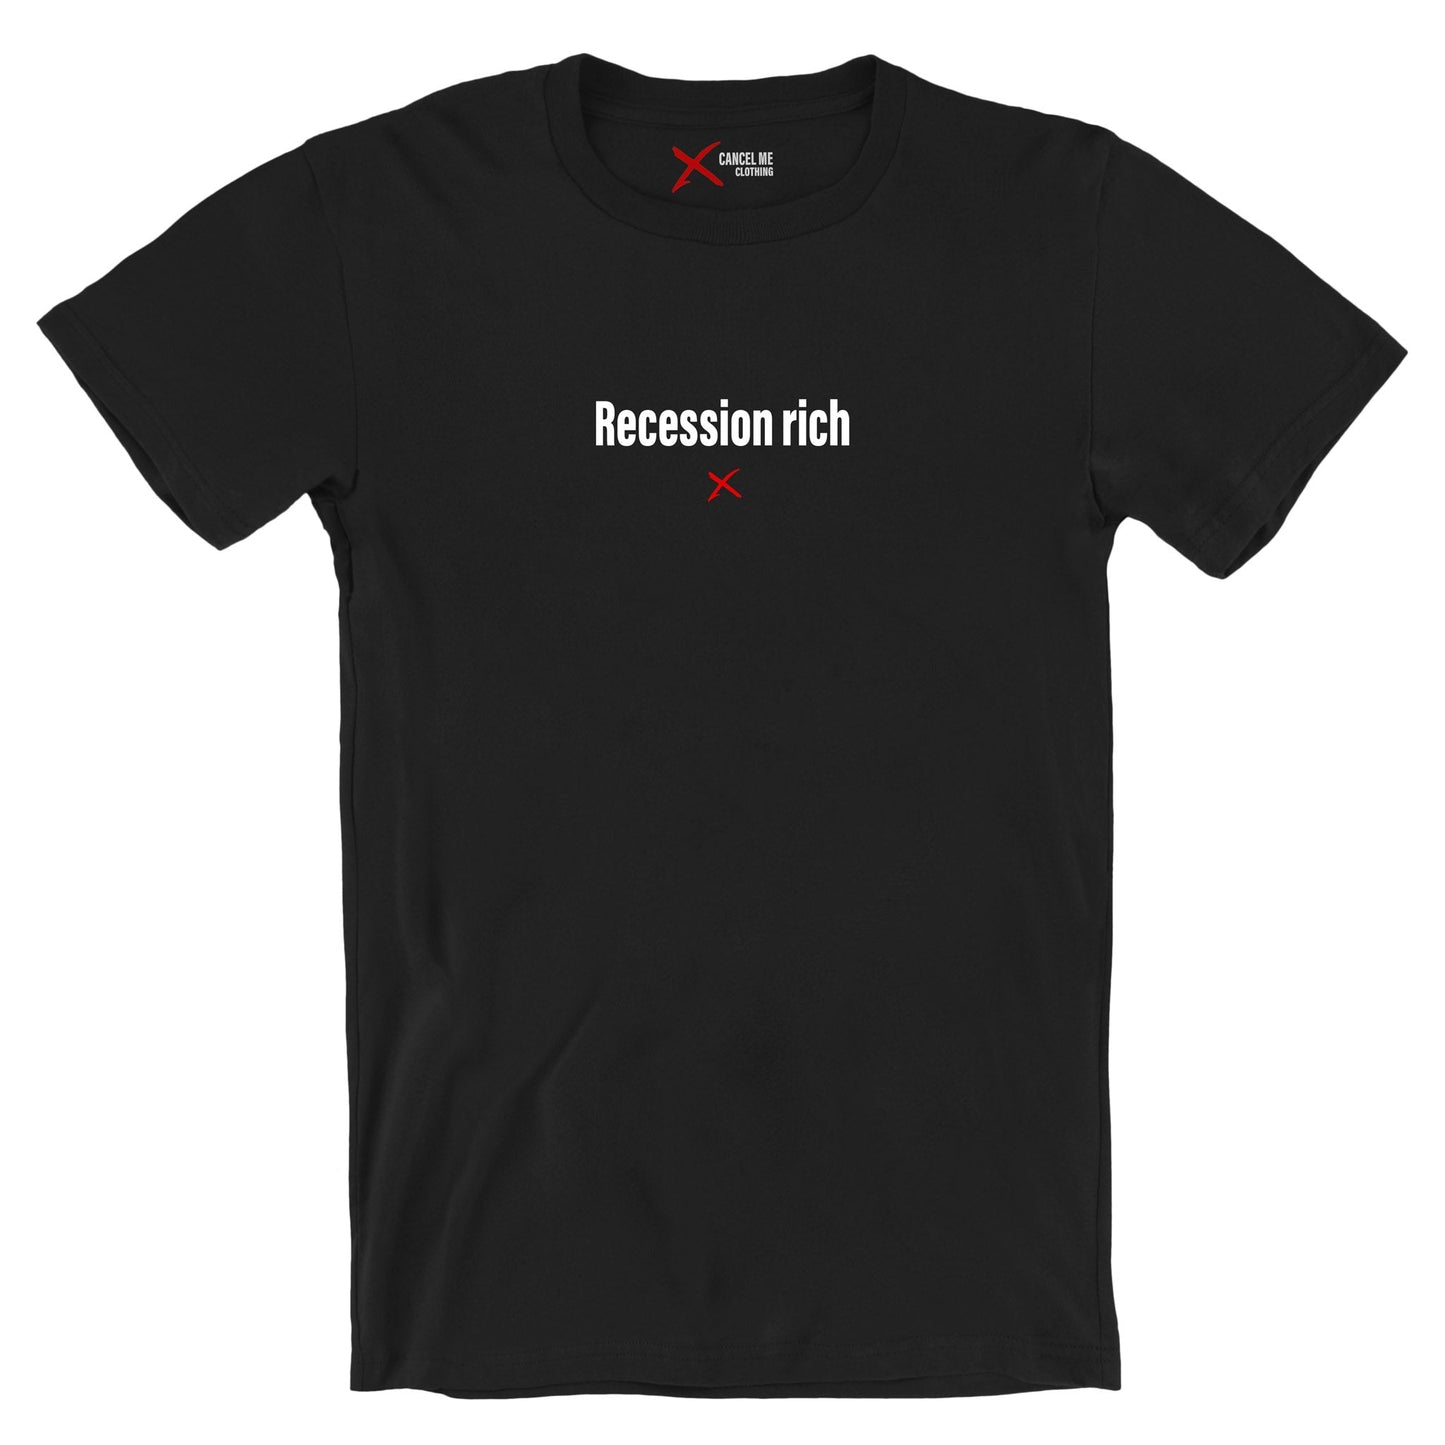 Recession rich - Shirt